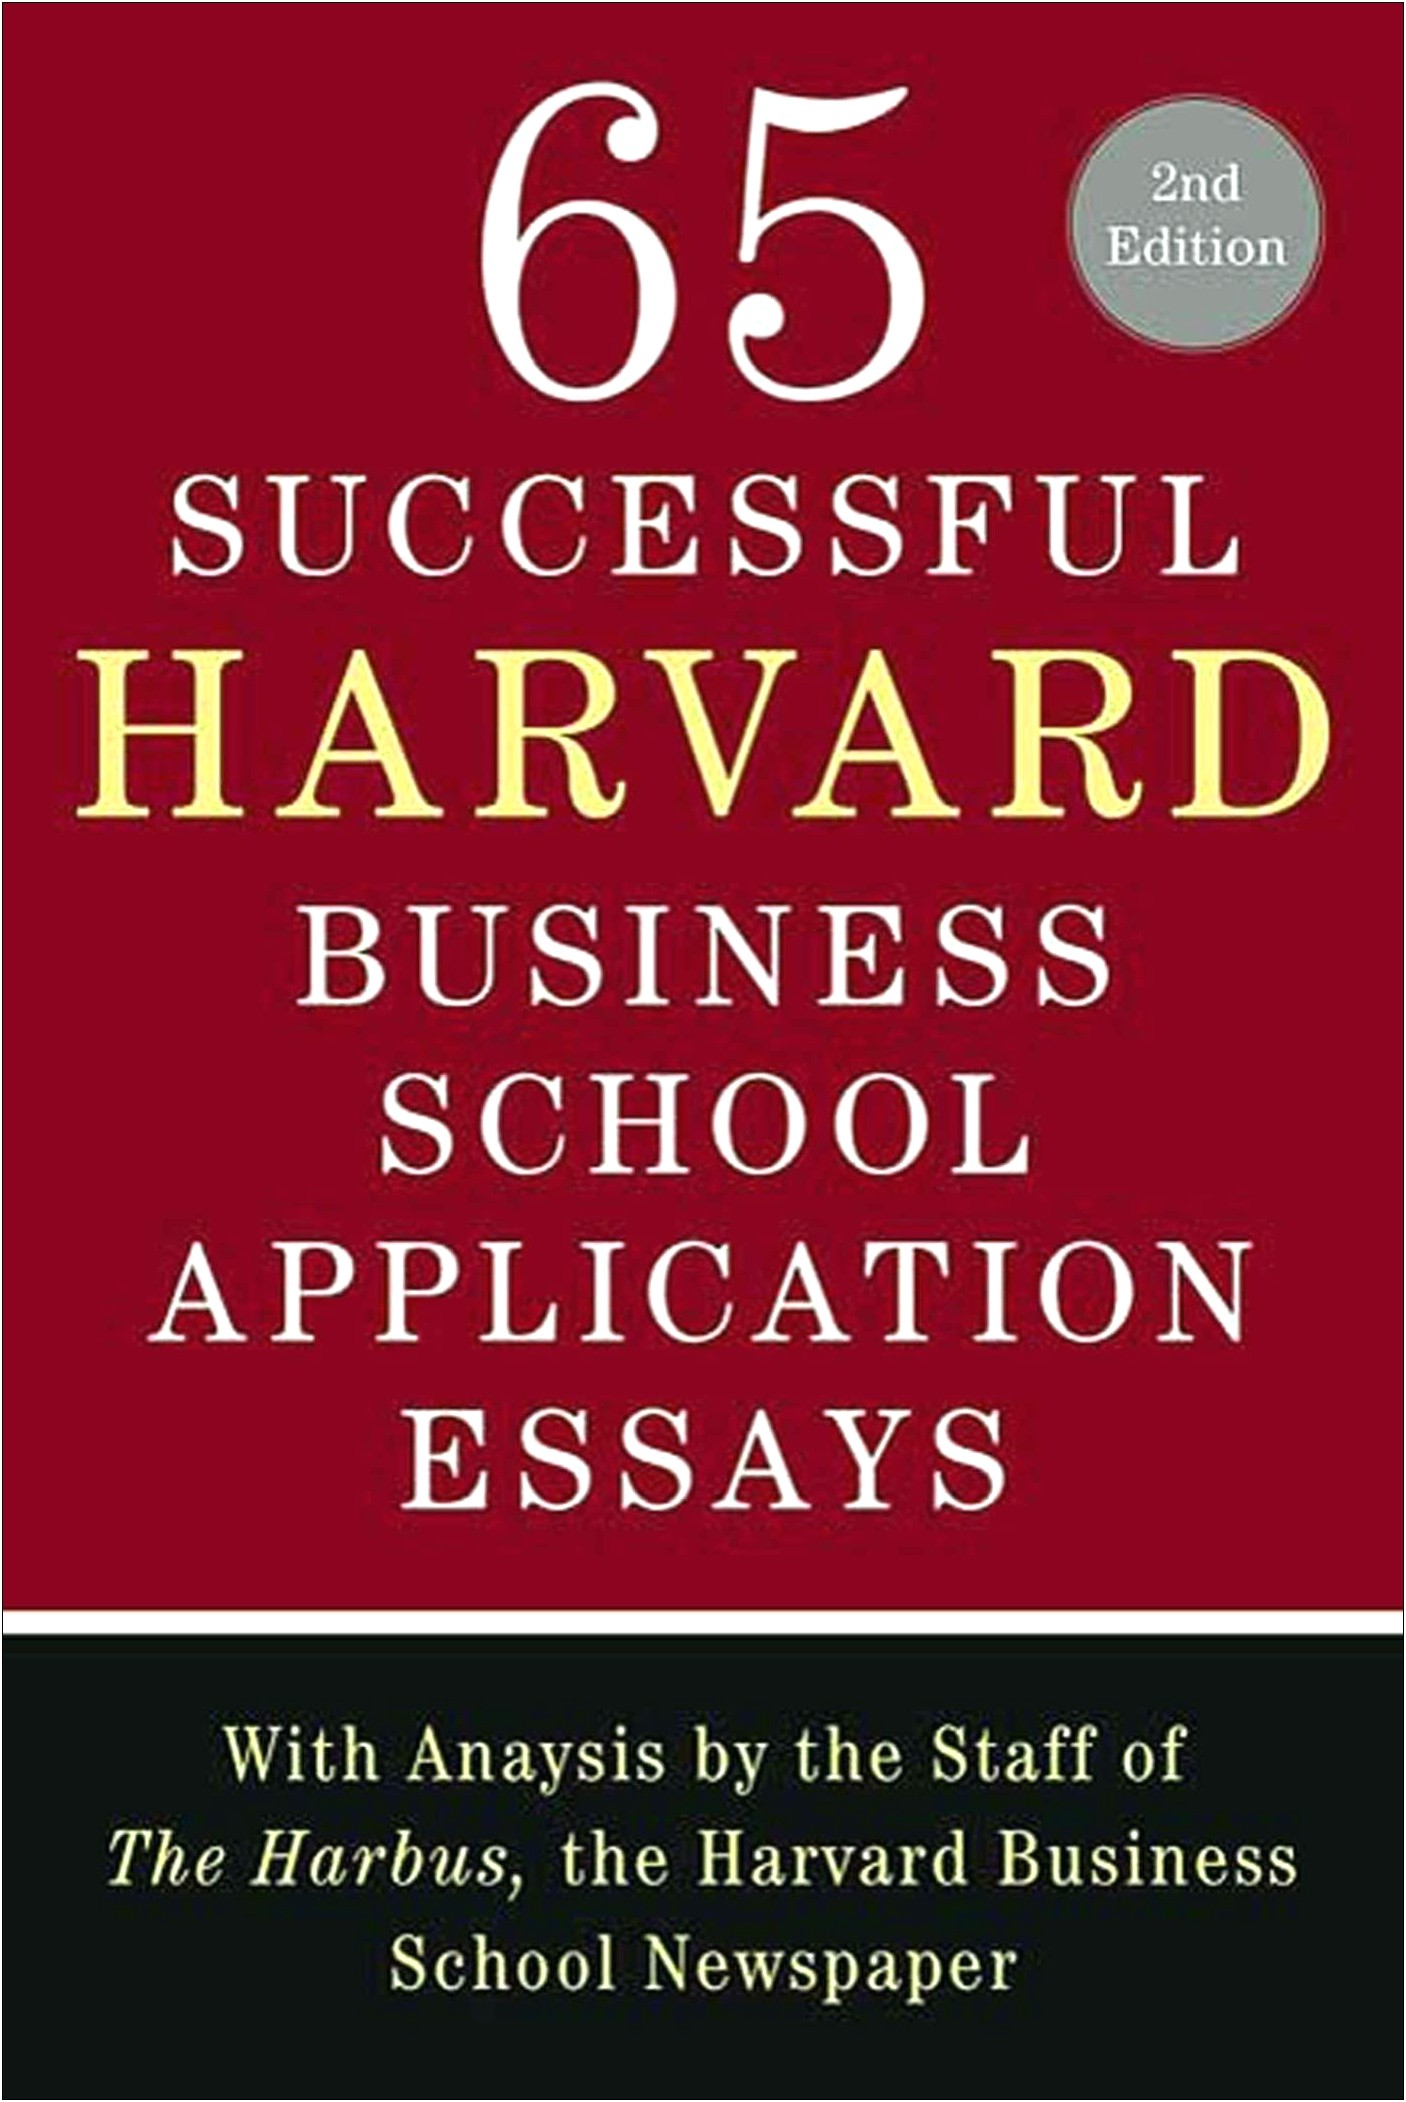 Business Analyst Resume Harvard Business School